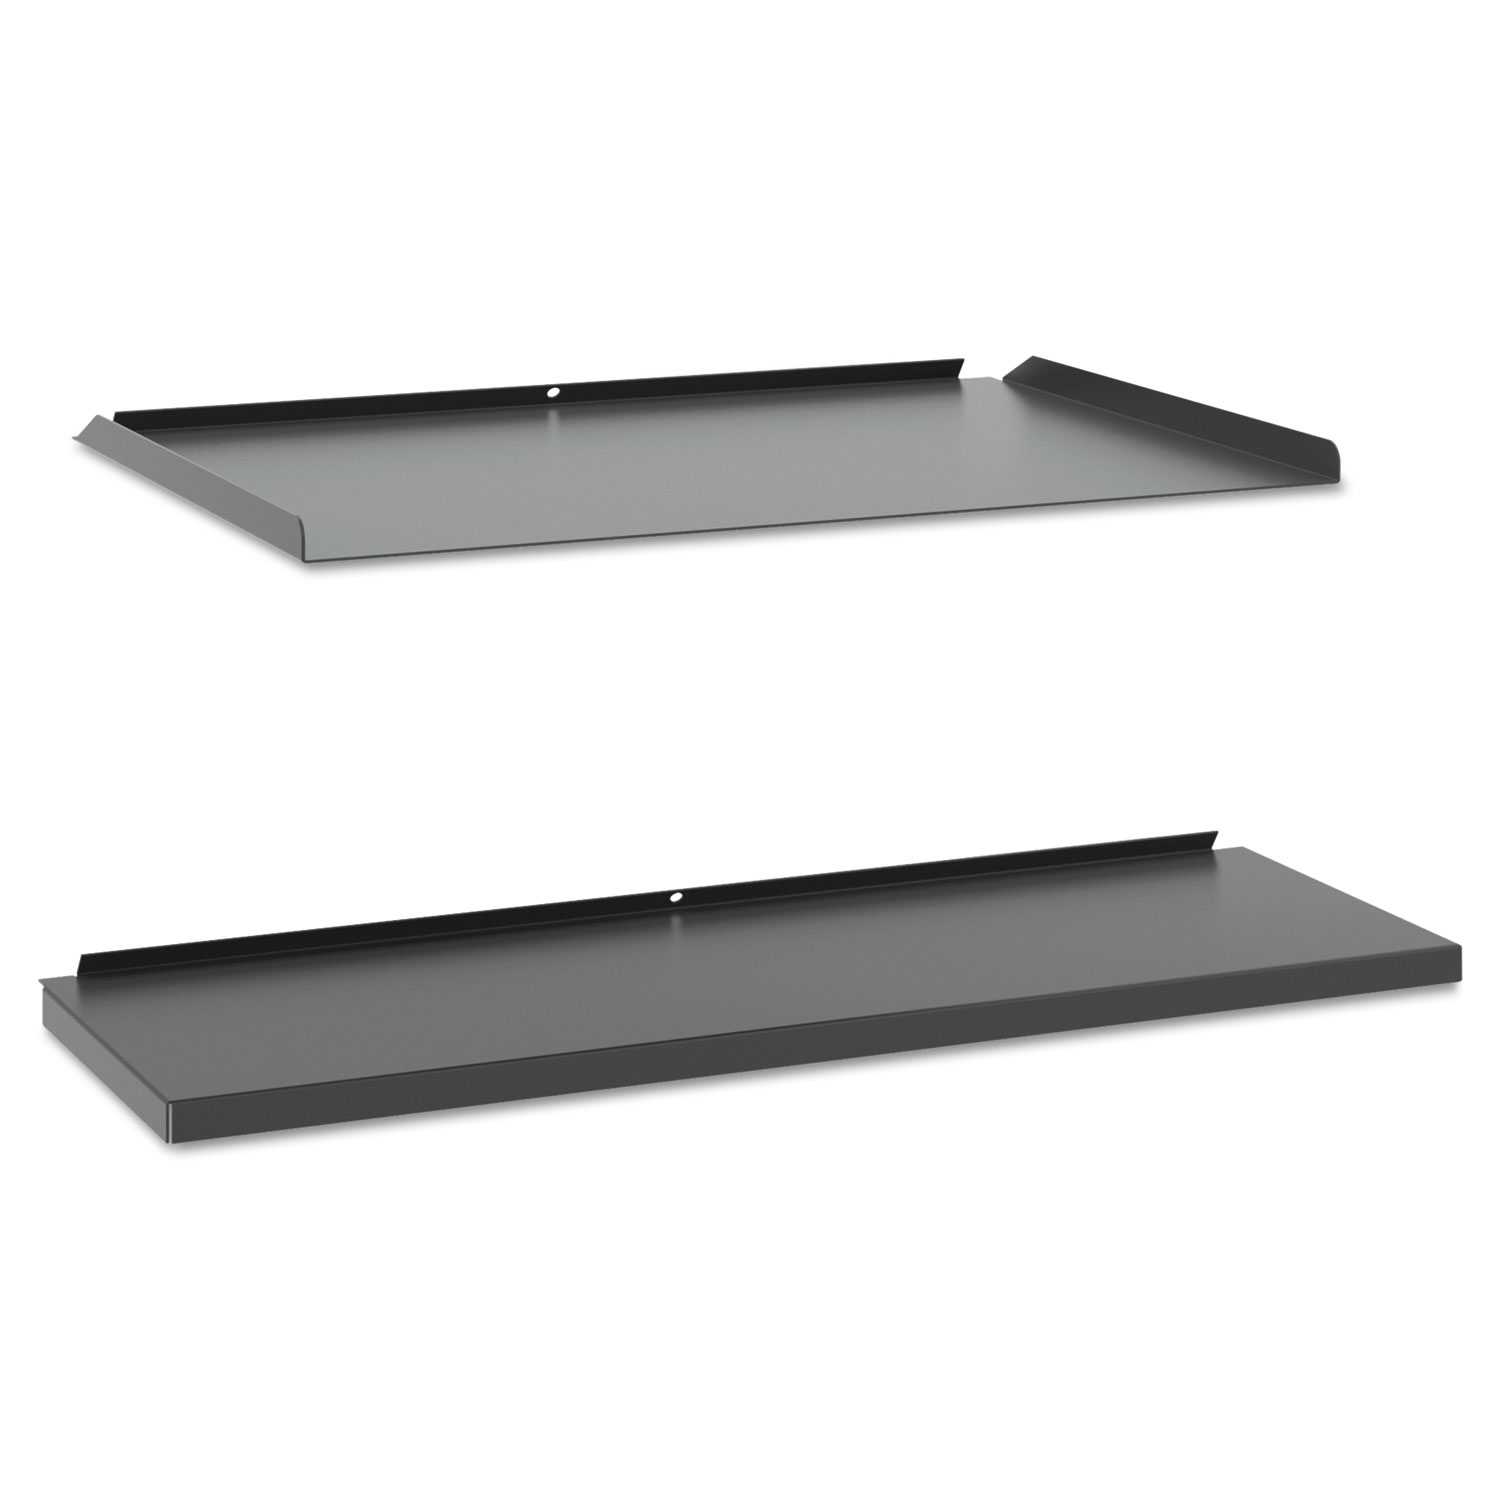  HON HMNGSHTR.A1 Manage Series Shelf and Tray Kit, Steel, 17.5w x 9d x 1h, Ash (BSXMGSHTRA1) 